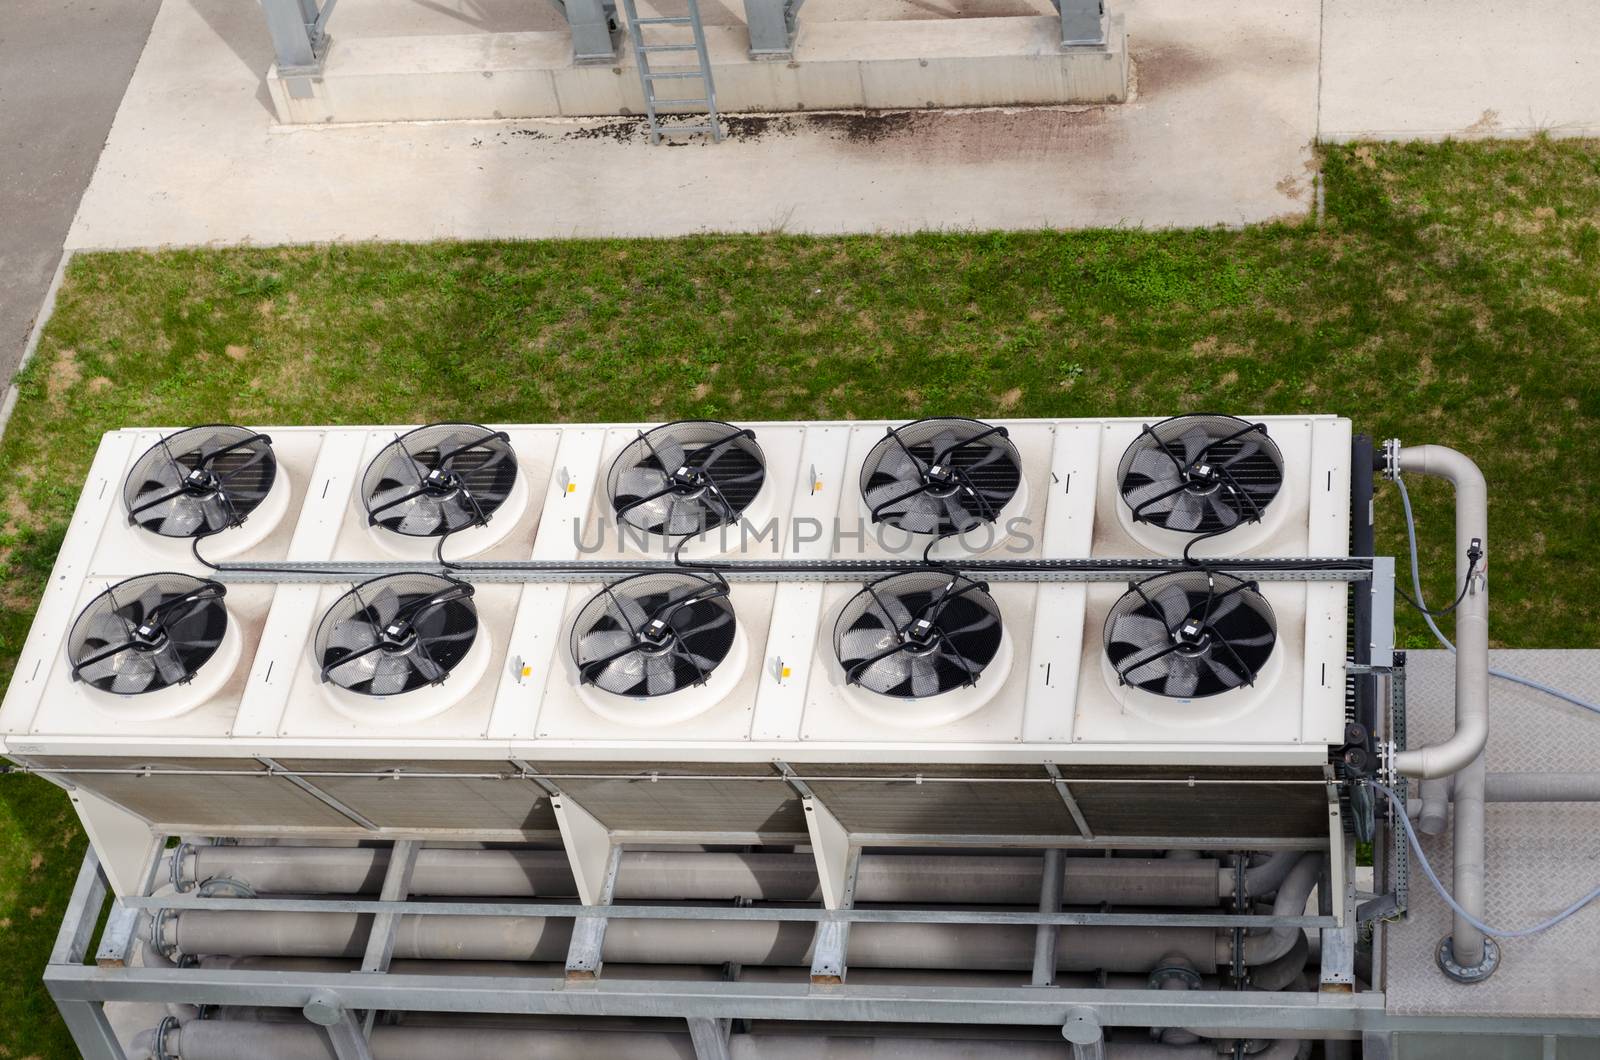 Ventilator fan spin on building biogas plant by sauletas